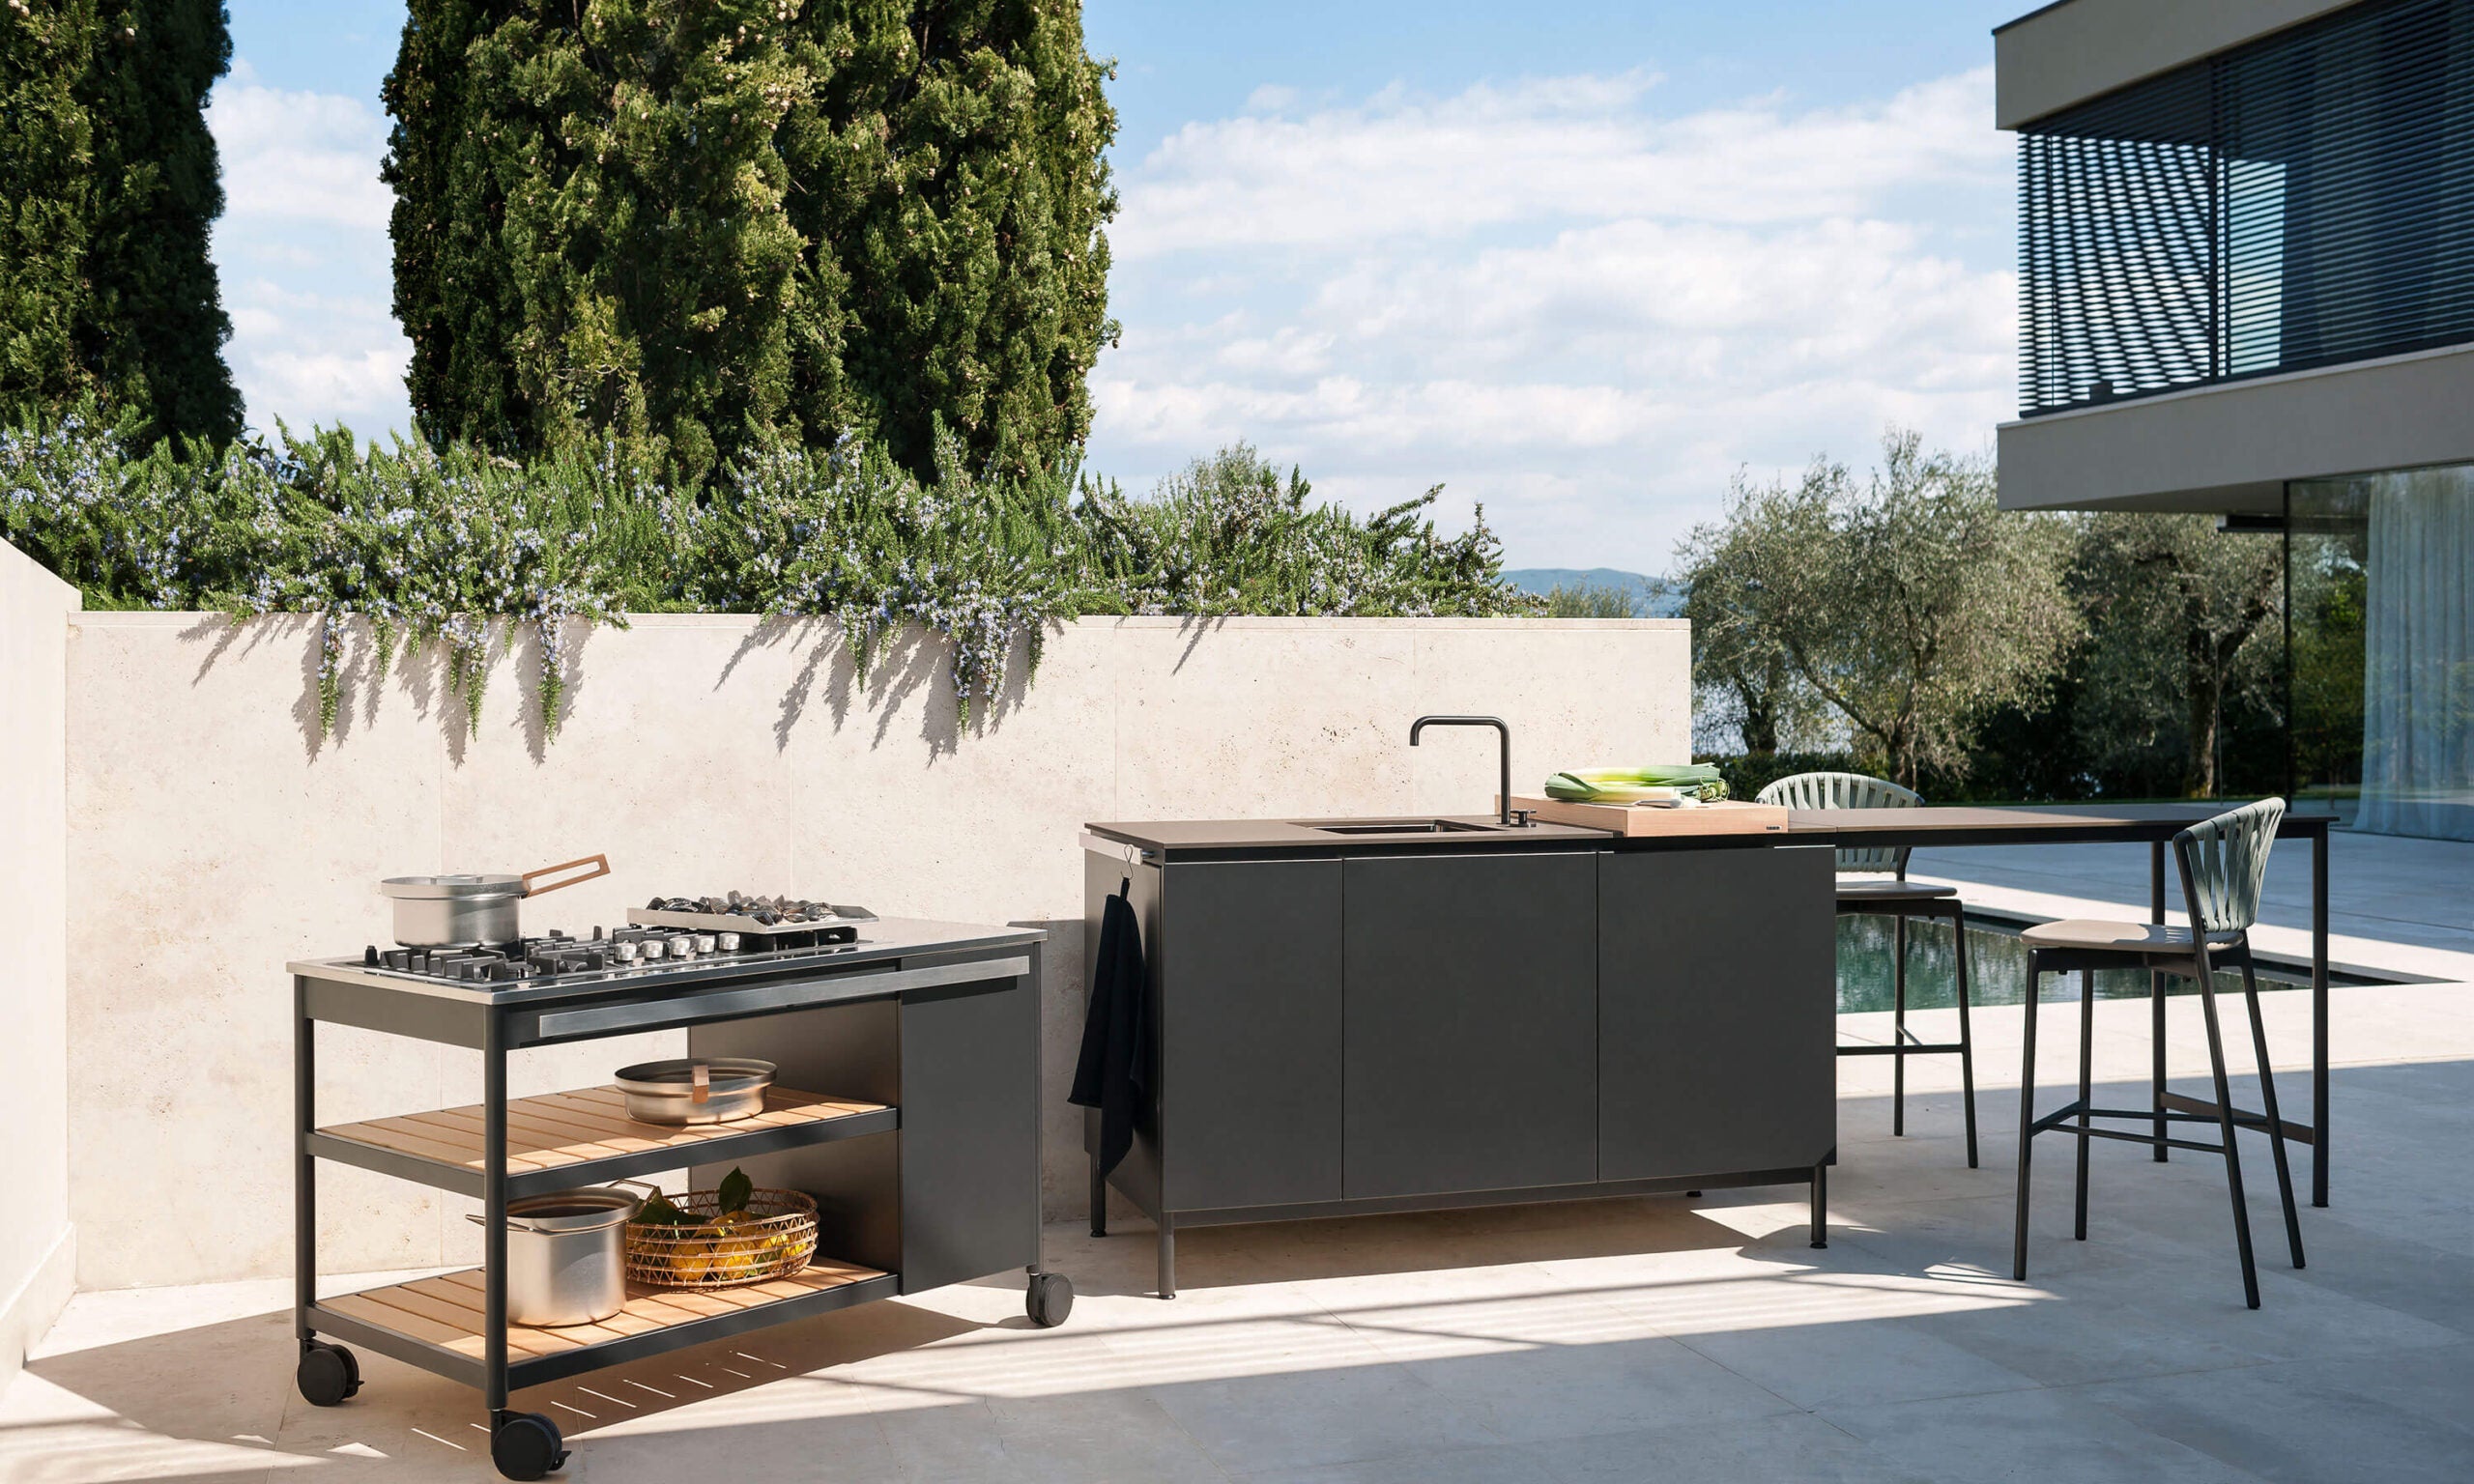 RODA’s NORMA outdoor kitchen system, designed by Rodolfo Dordoni.